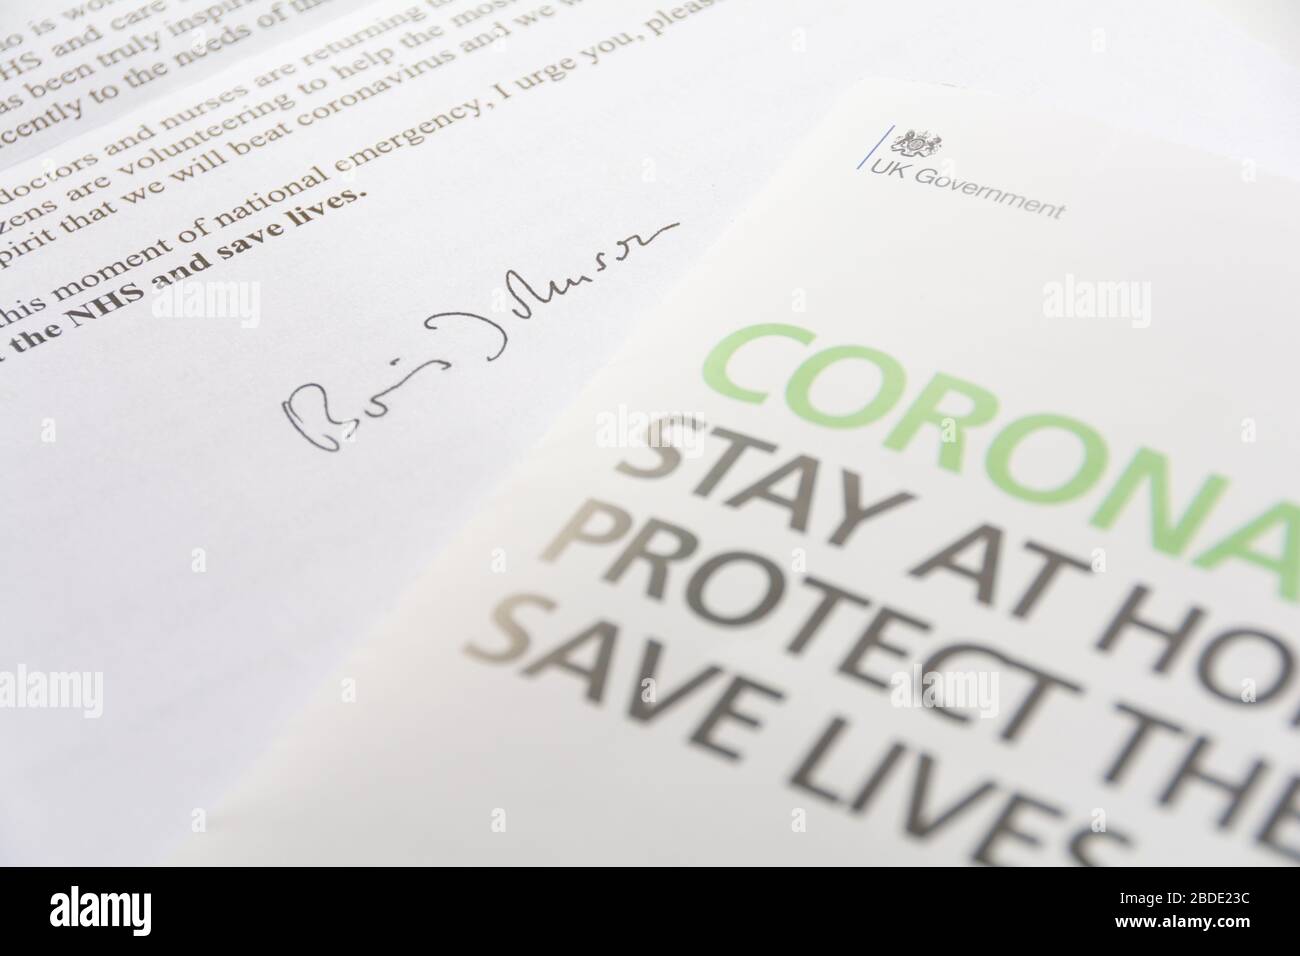 London, England, Großbritannien. April 2020. Coronavirus Brief des britischen Premierministers Boris Johnson kommt per Post an © Benjamin John Stockfoto